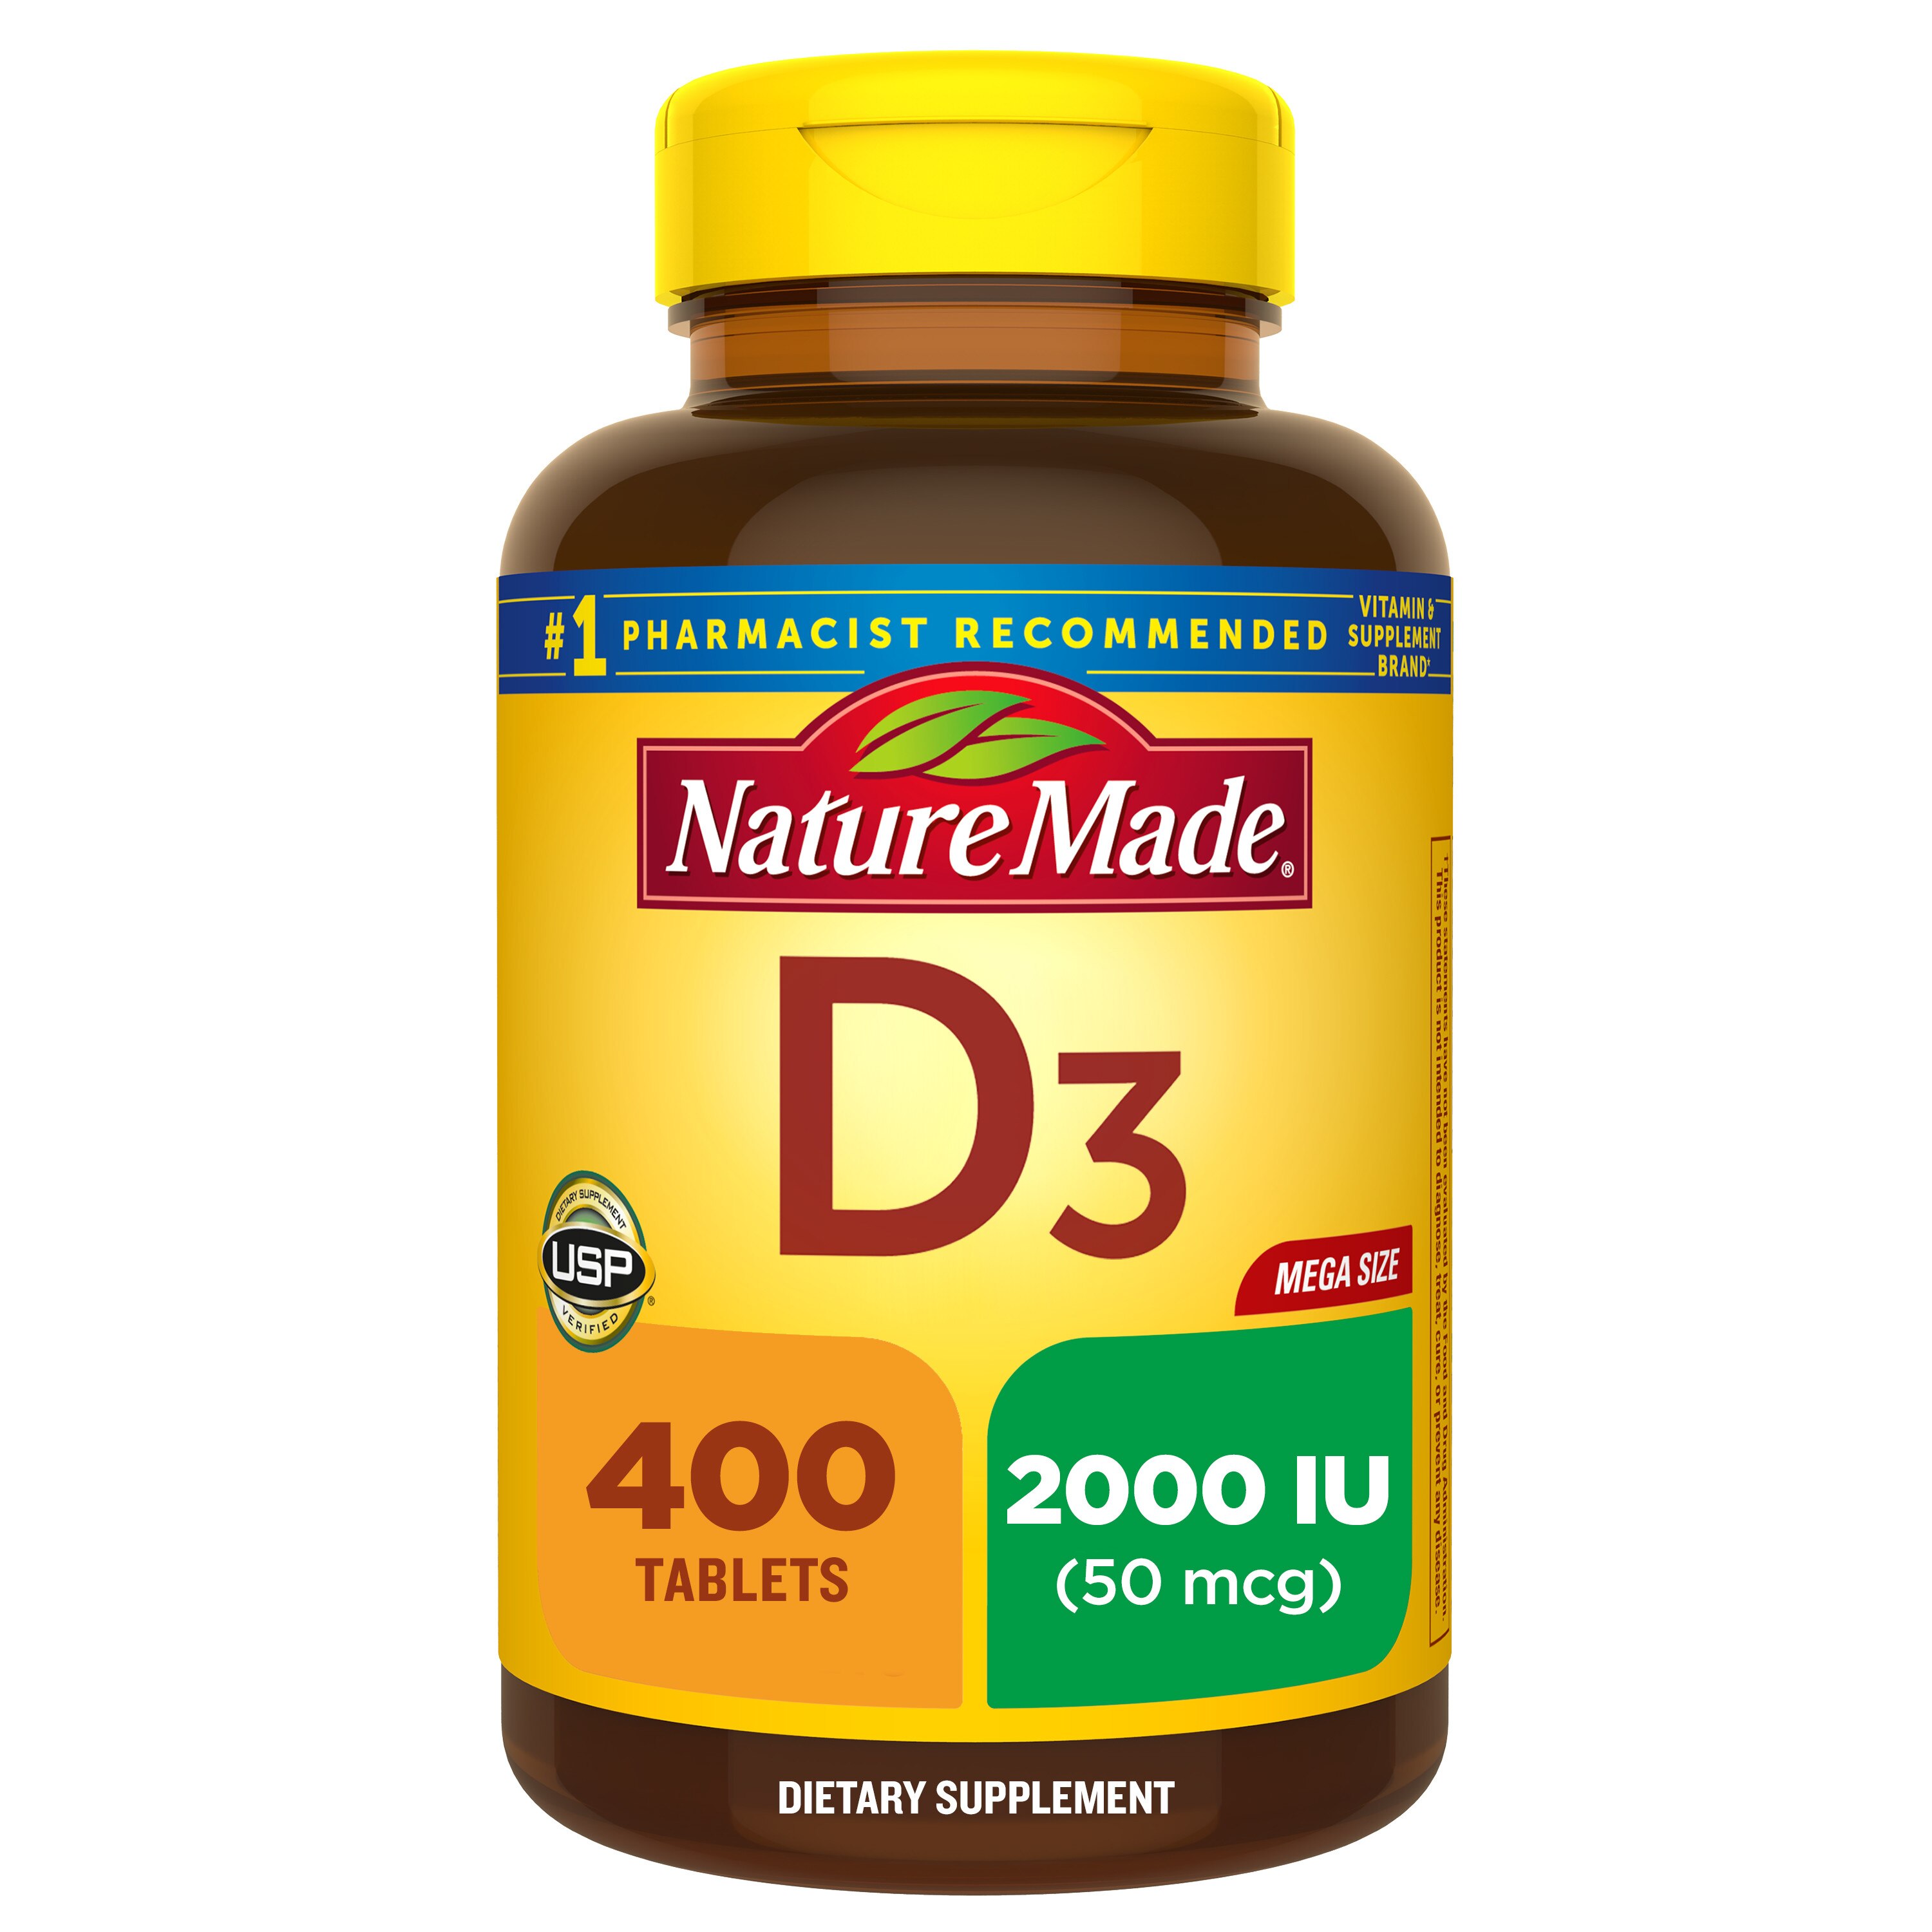 Nature Made Vitamin D3 2000 IU (50 mcg) Tablets, 400 CT